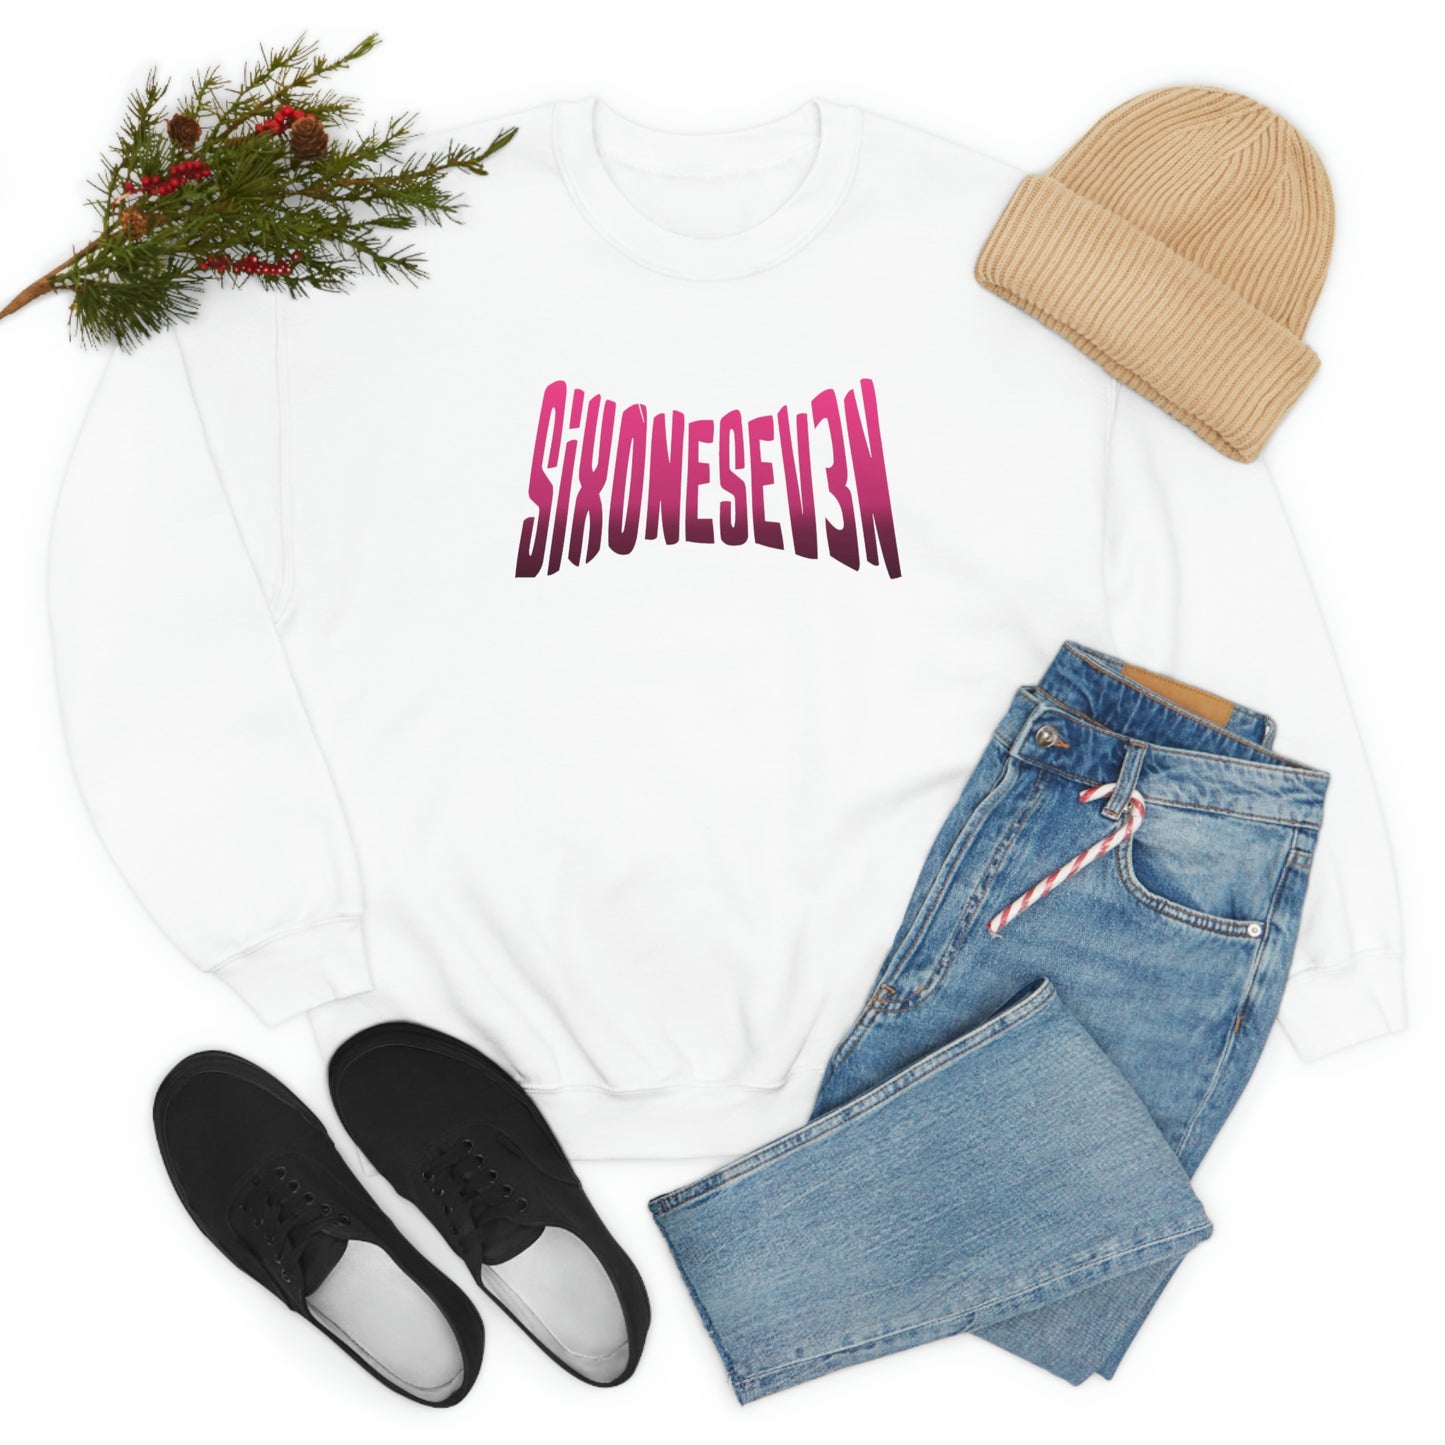 SixOneSev3n Text Unisex Sweatshirt